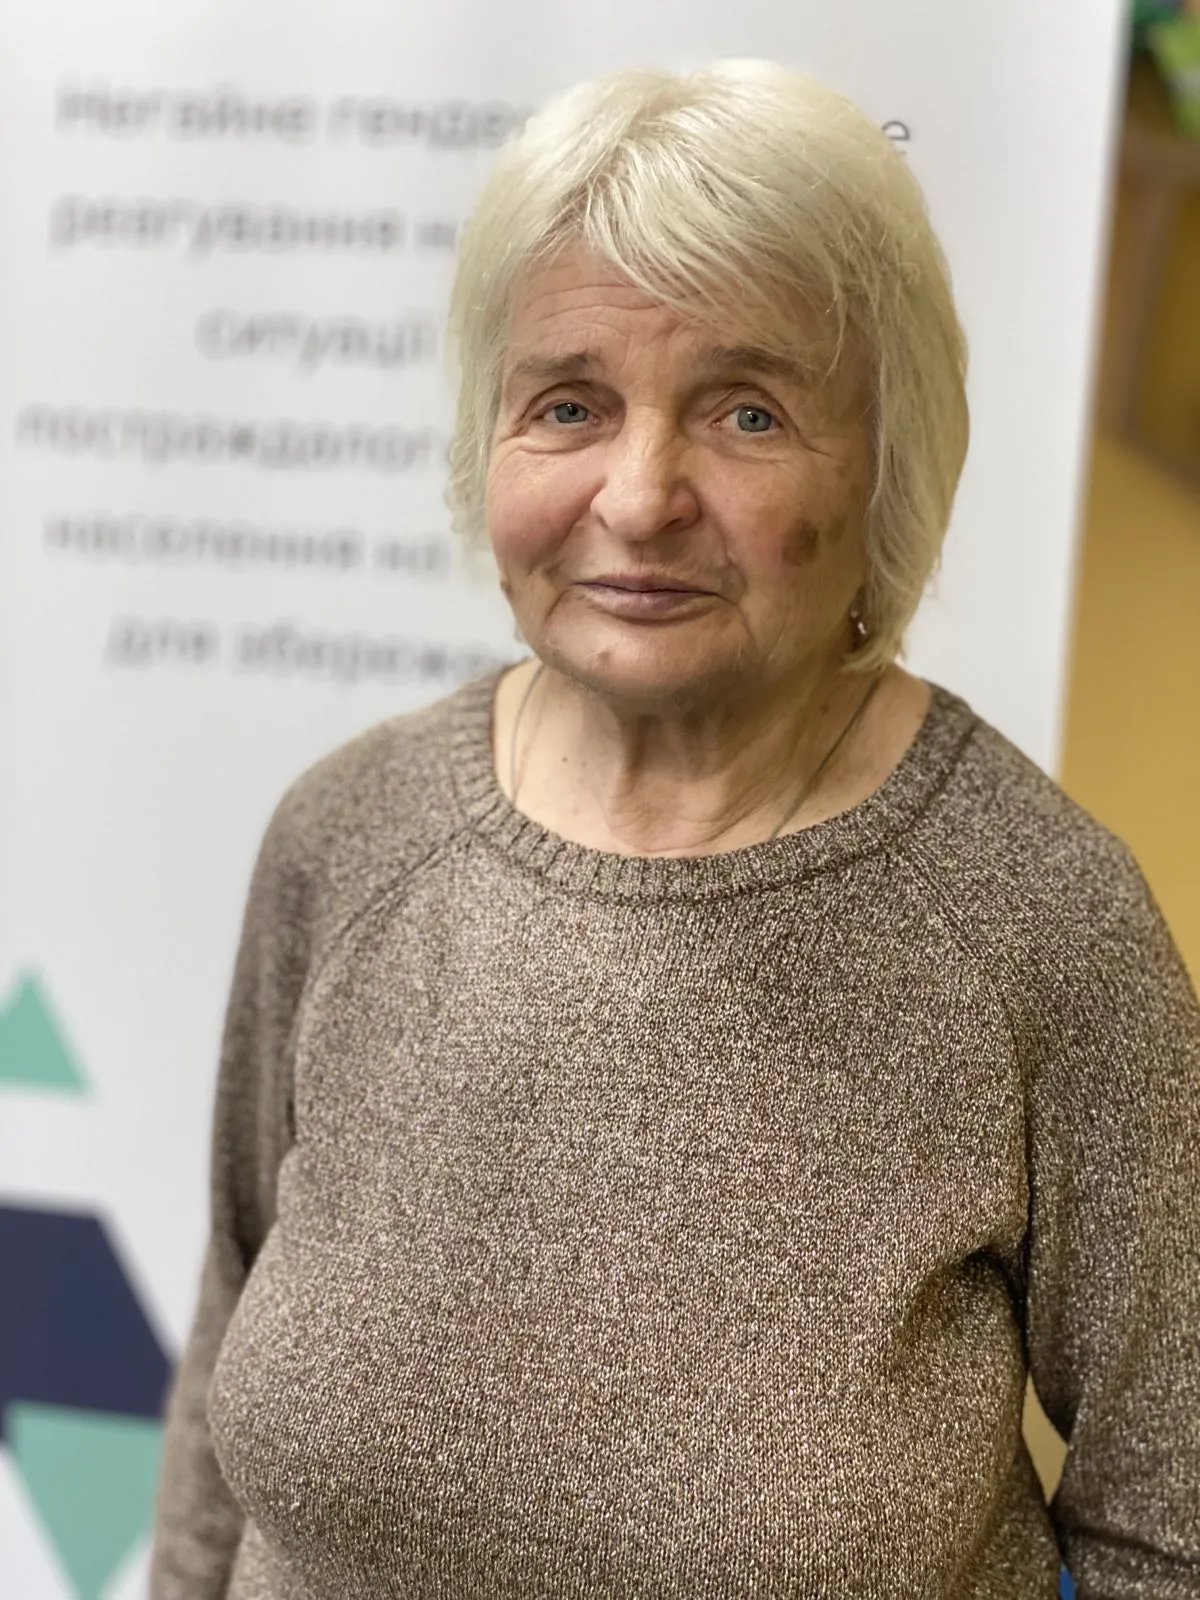 Medium portrait of older woman in brown sweater.